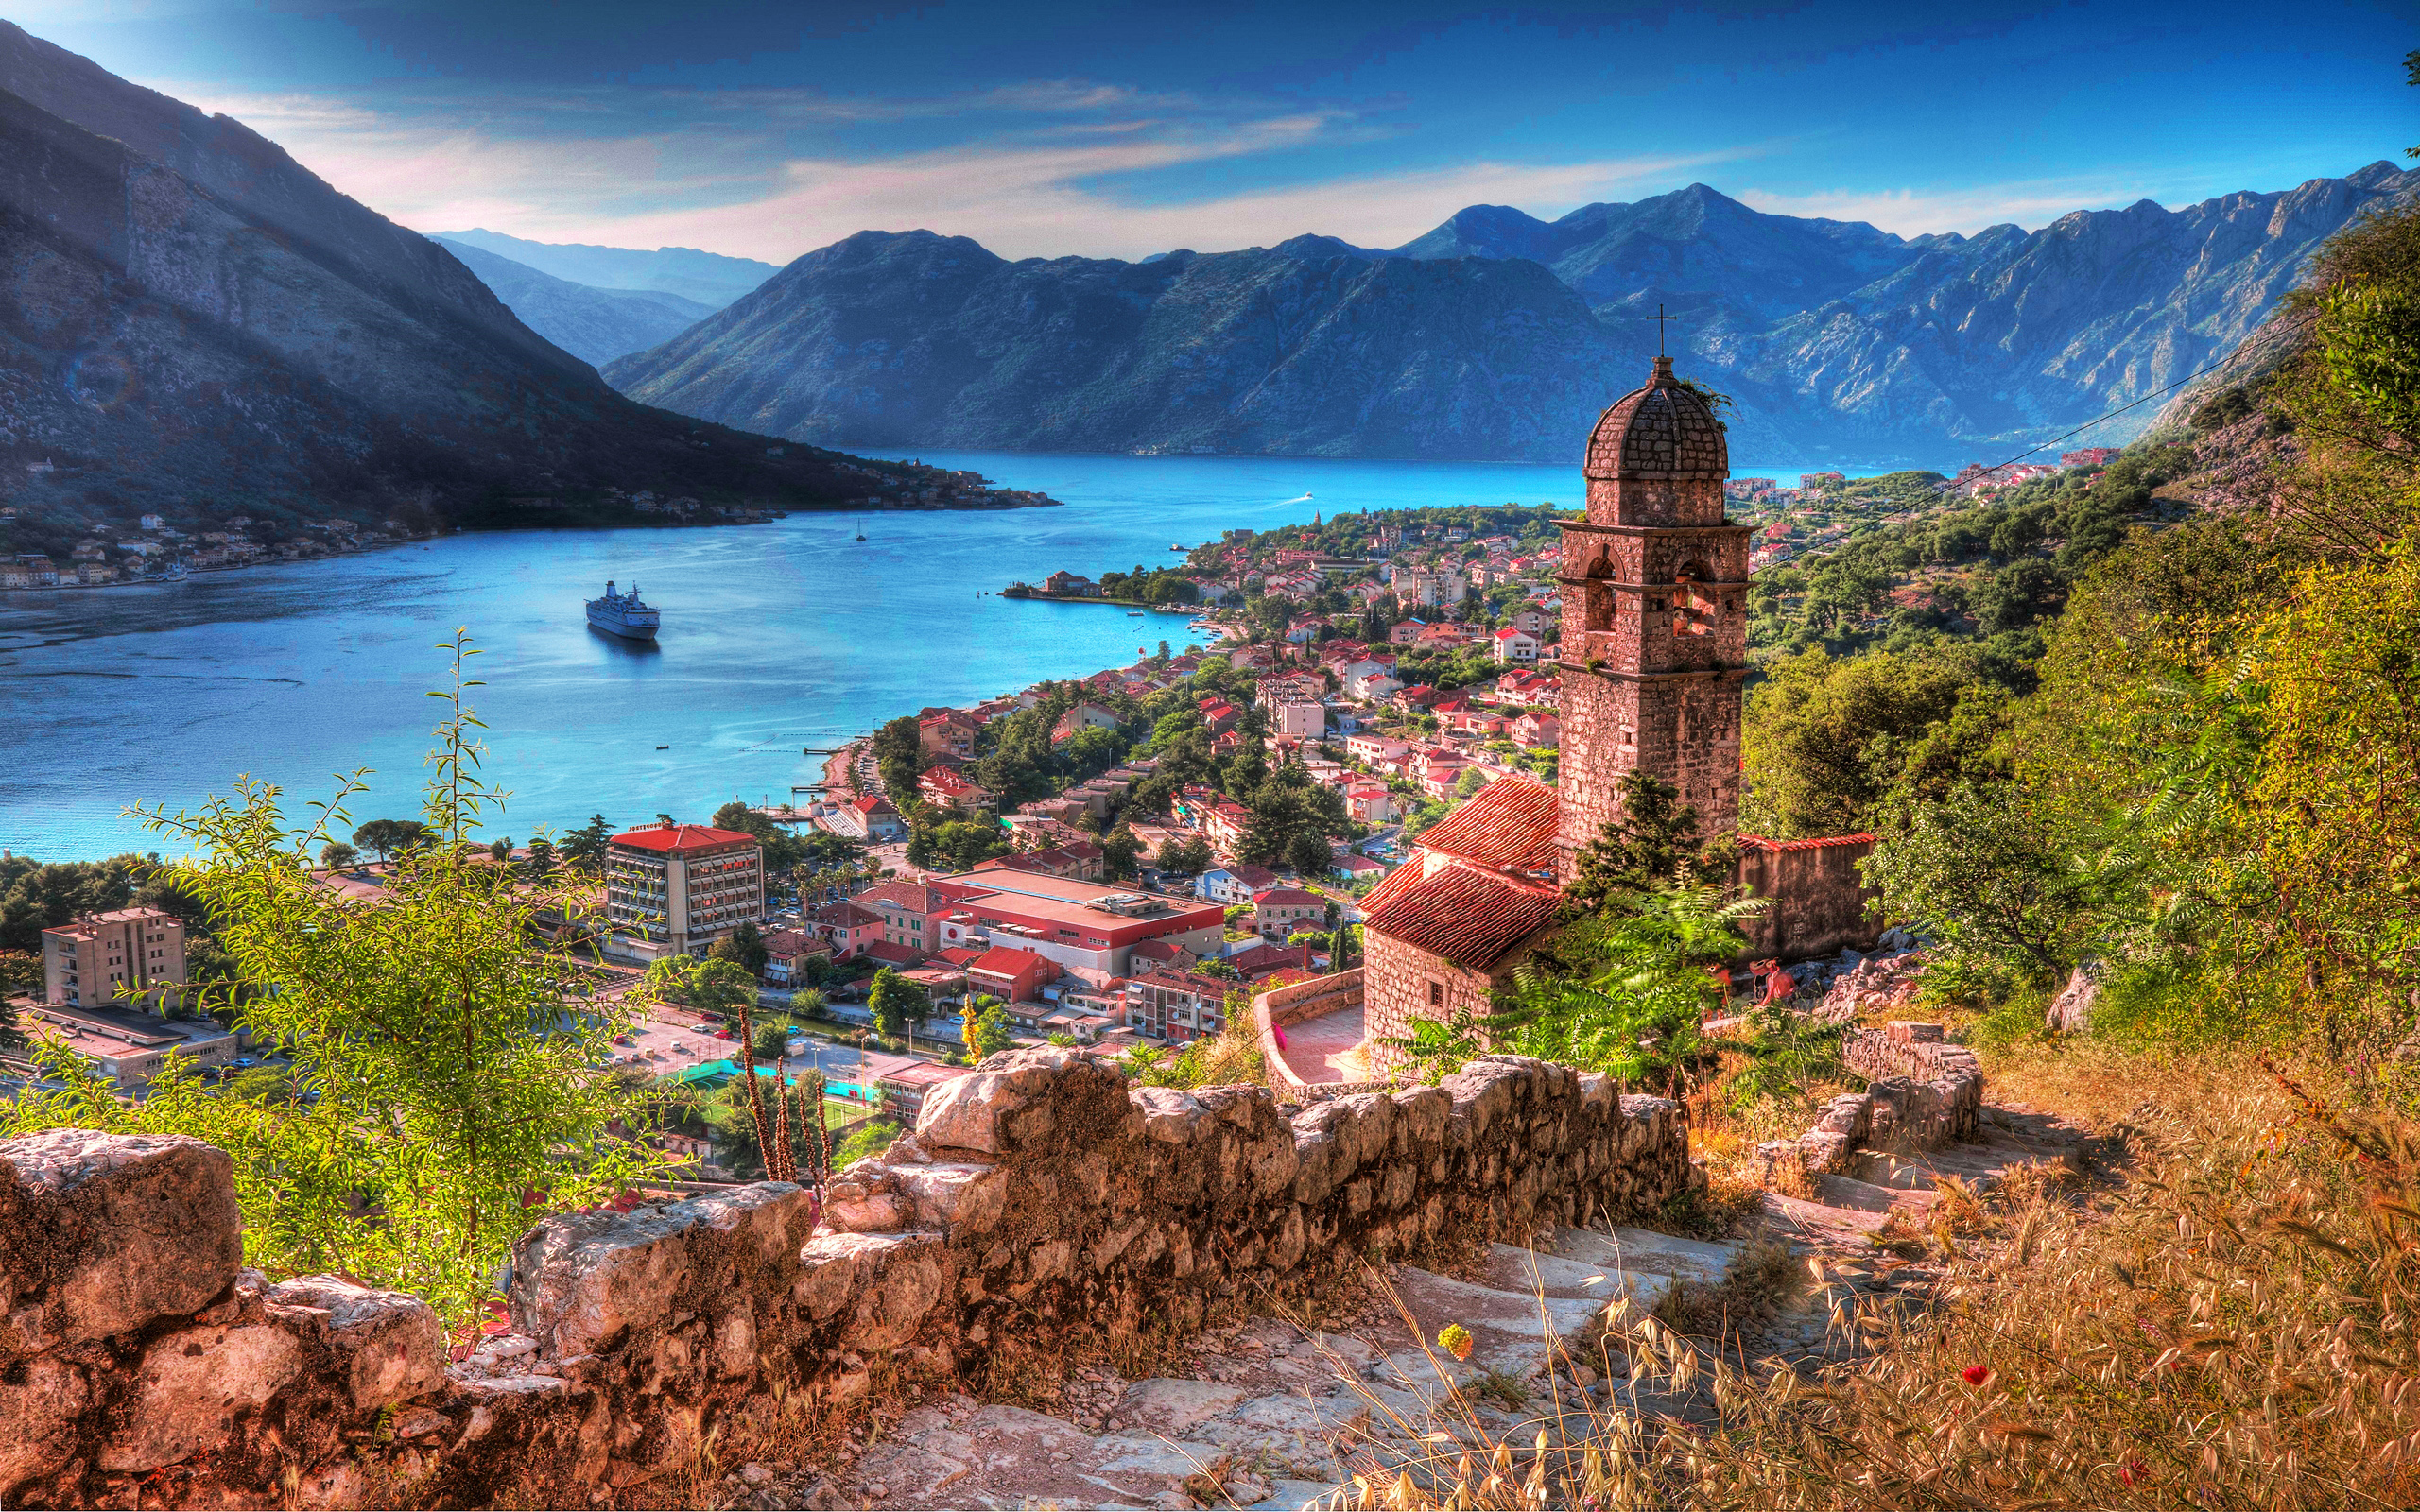 montenegro, mountain, man made, kotor, church, house, ship, town, towns